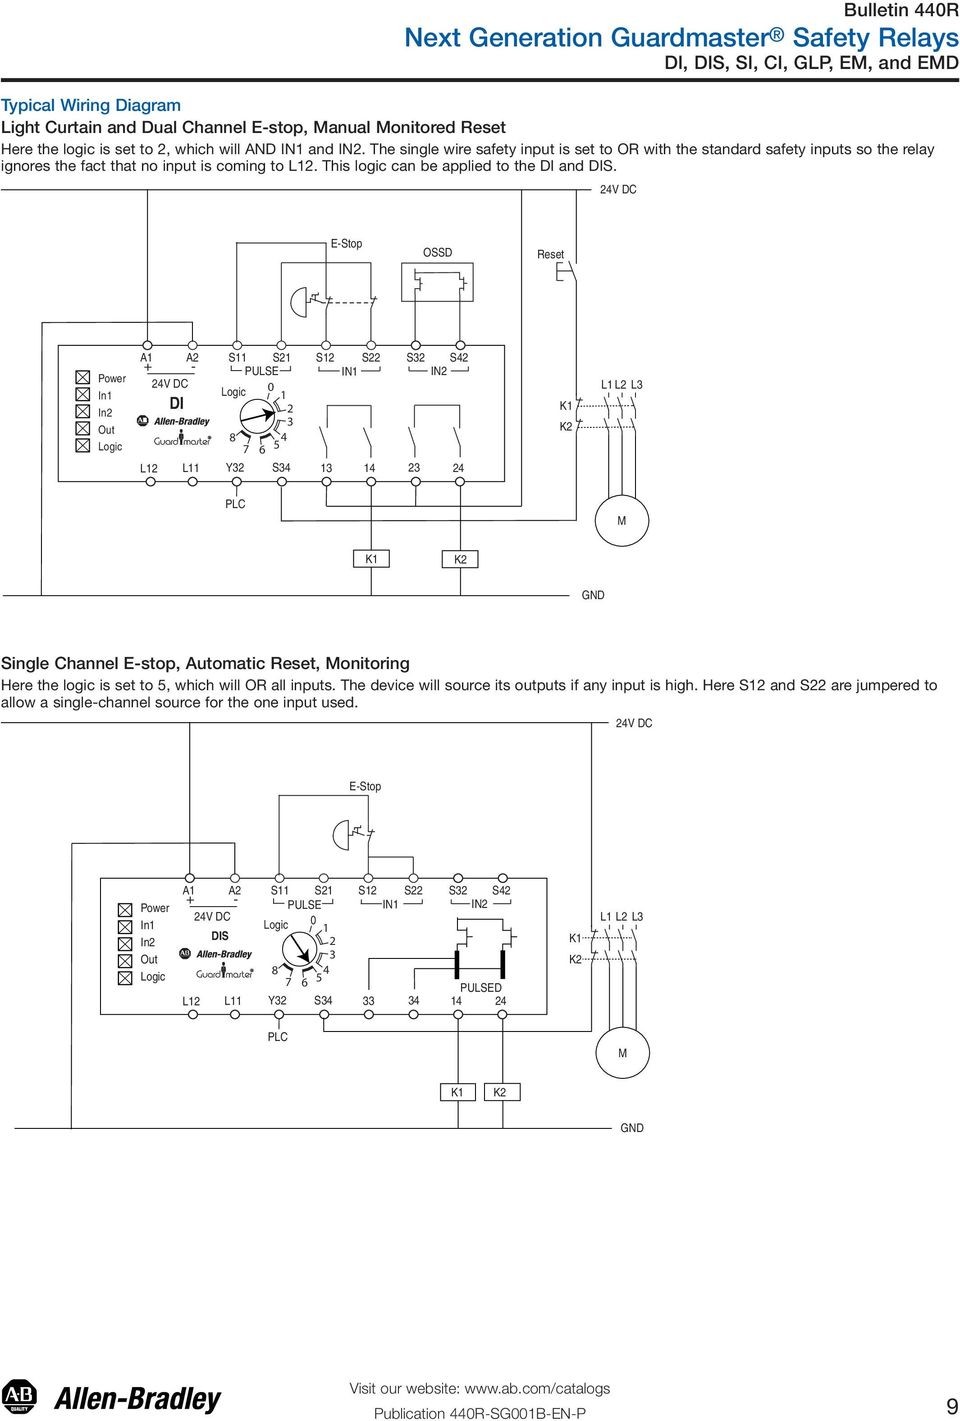 Ab Alternating Relay Wiring Diagram DIY Wiring Diagrams Bul 440R Guardmaster Safety Relays DI DIS SI CI GLP